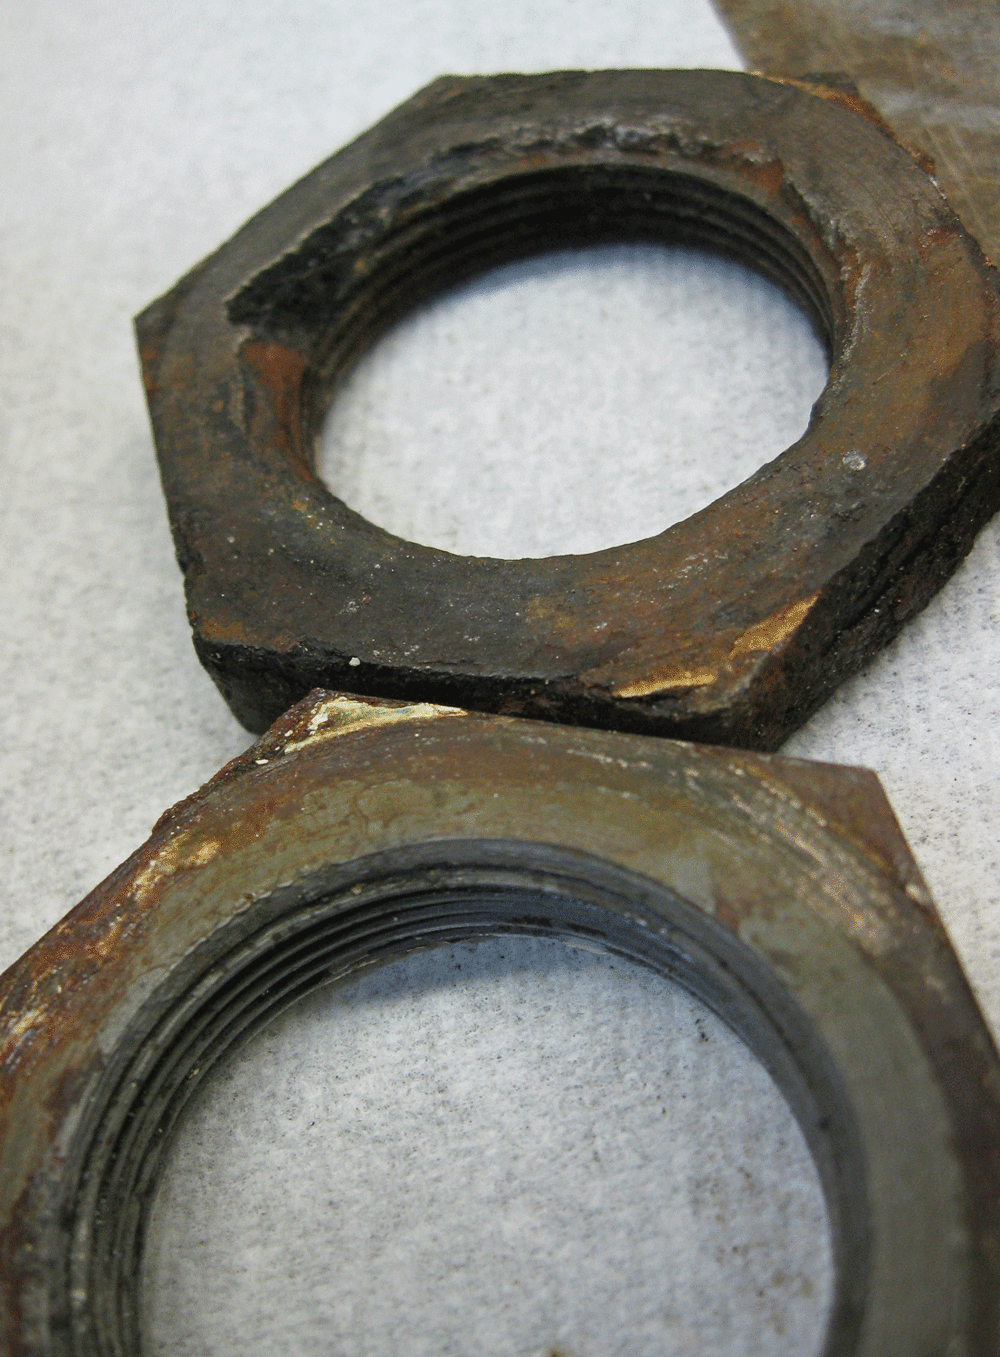 Oil cooler nut corrosion